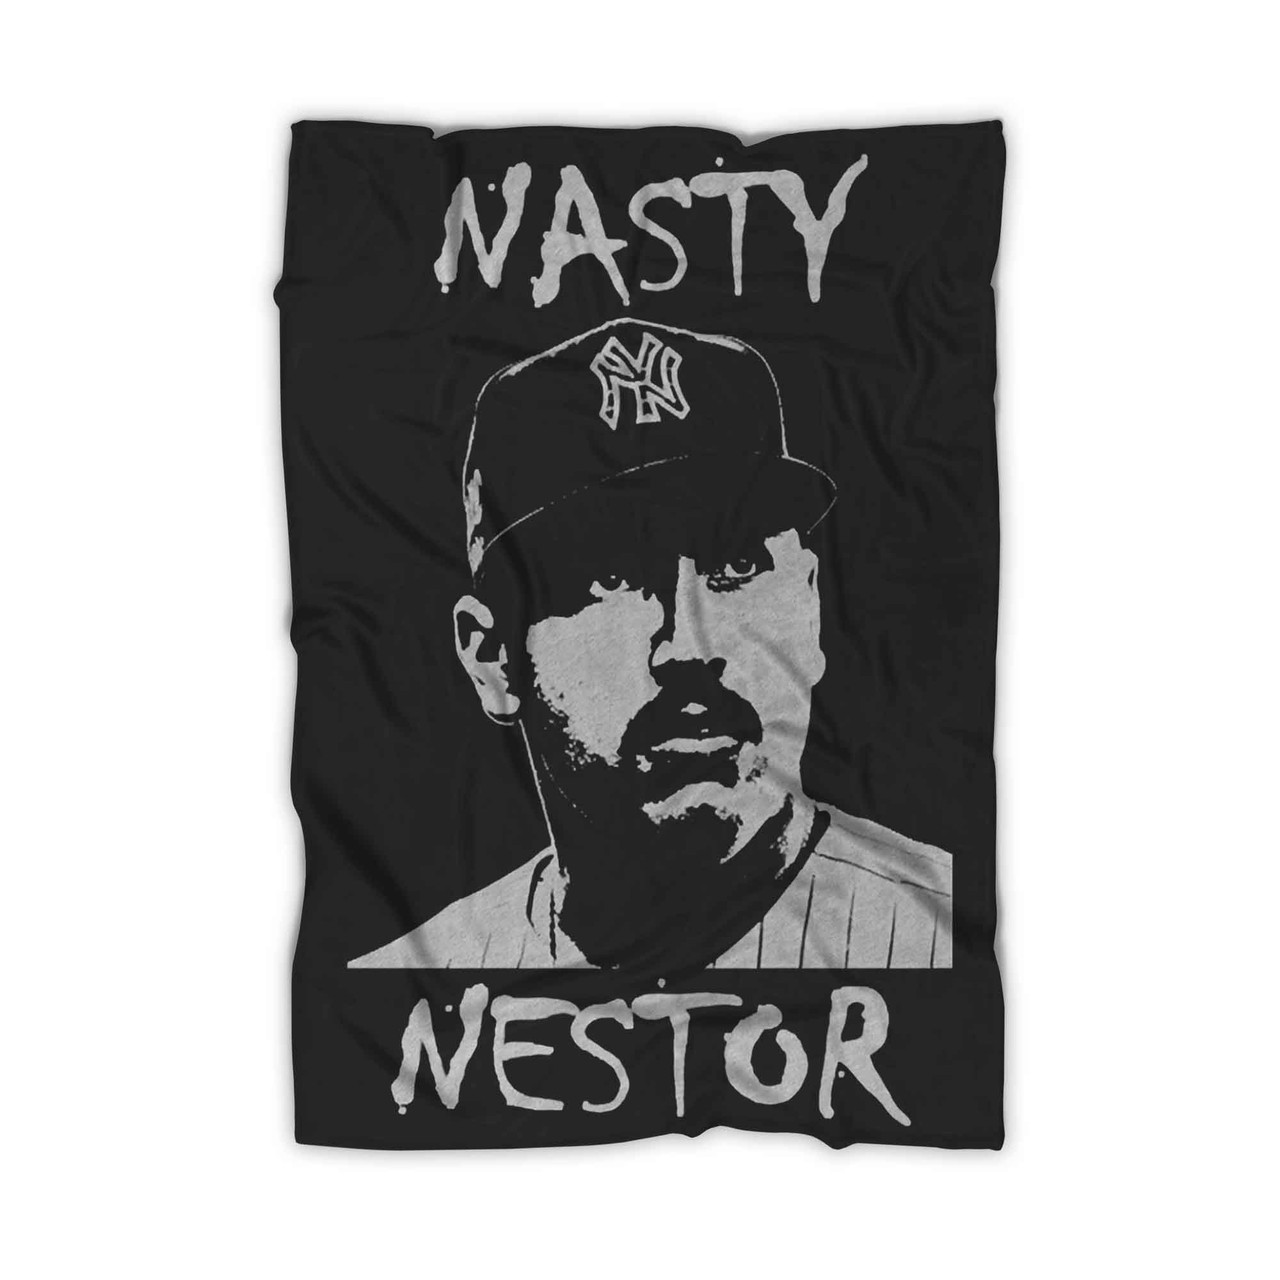 Nasty Nestor Cortes Jr Yankees